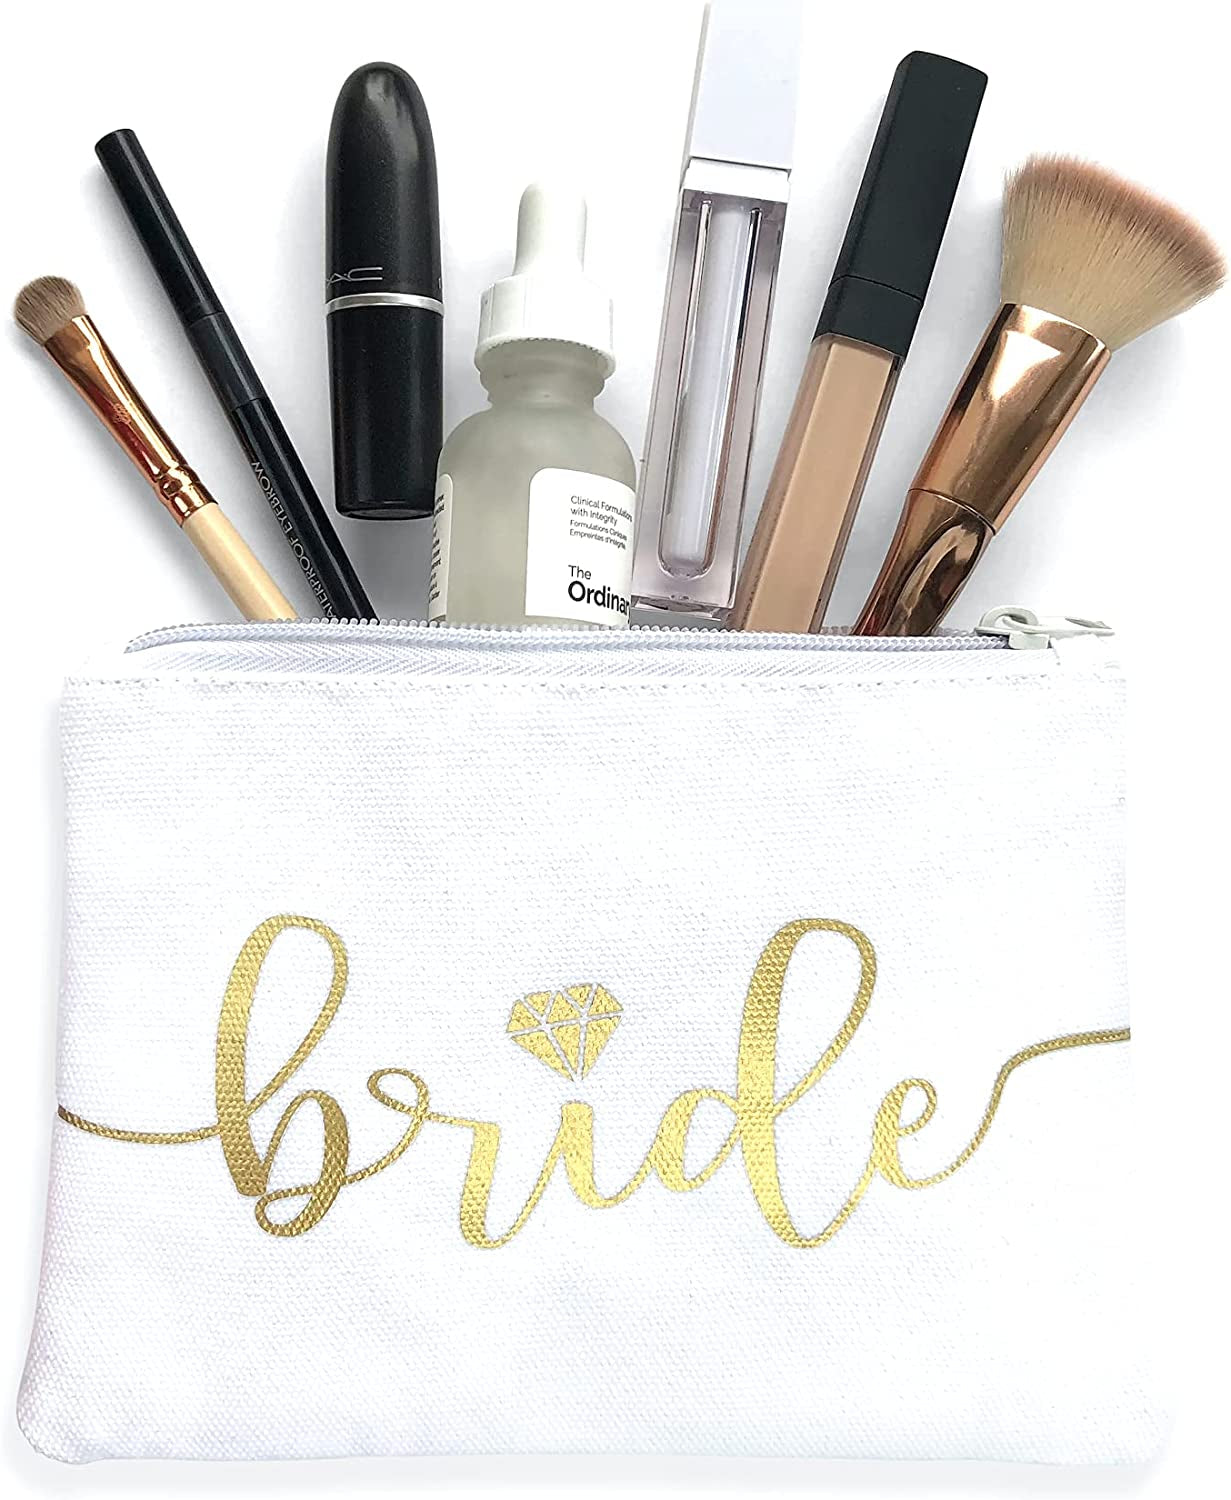 Bride Tribe Makeup Bags - Bridesmaid Favor for Bachelorette Party, Bridal Shower, Wedding. Cosmetics/Toiletries Bag, Wedding Survival Kit, Hangover Kit, Keepsake (4+1Pc Bride Tribe + Bride, Blush)